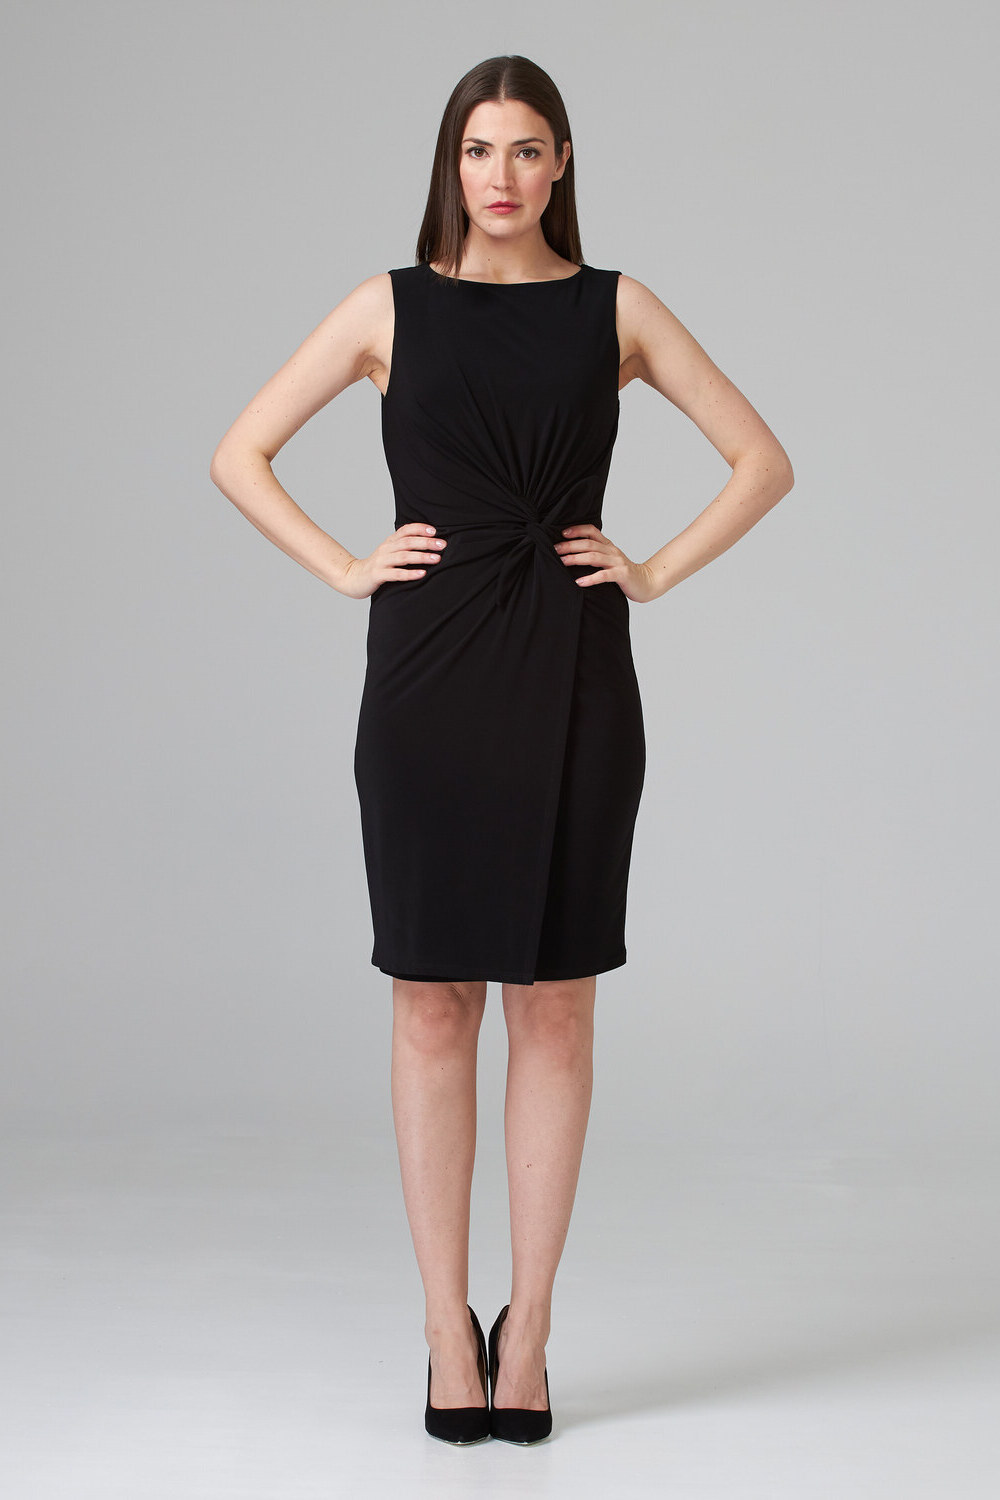 Joseph Ribkoff Dress Style 201476. Black